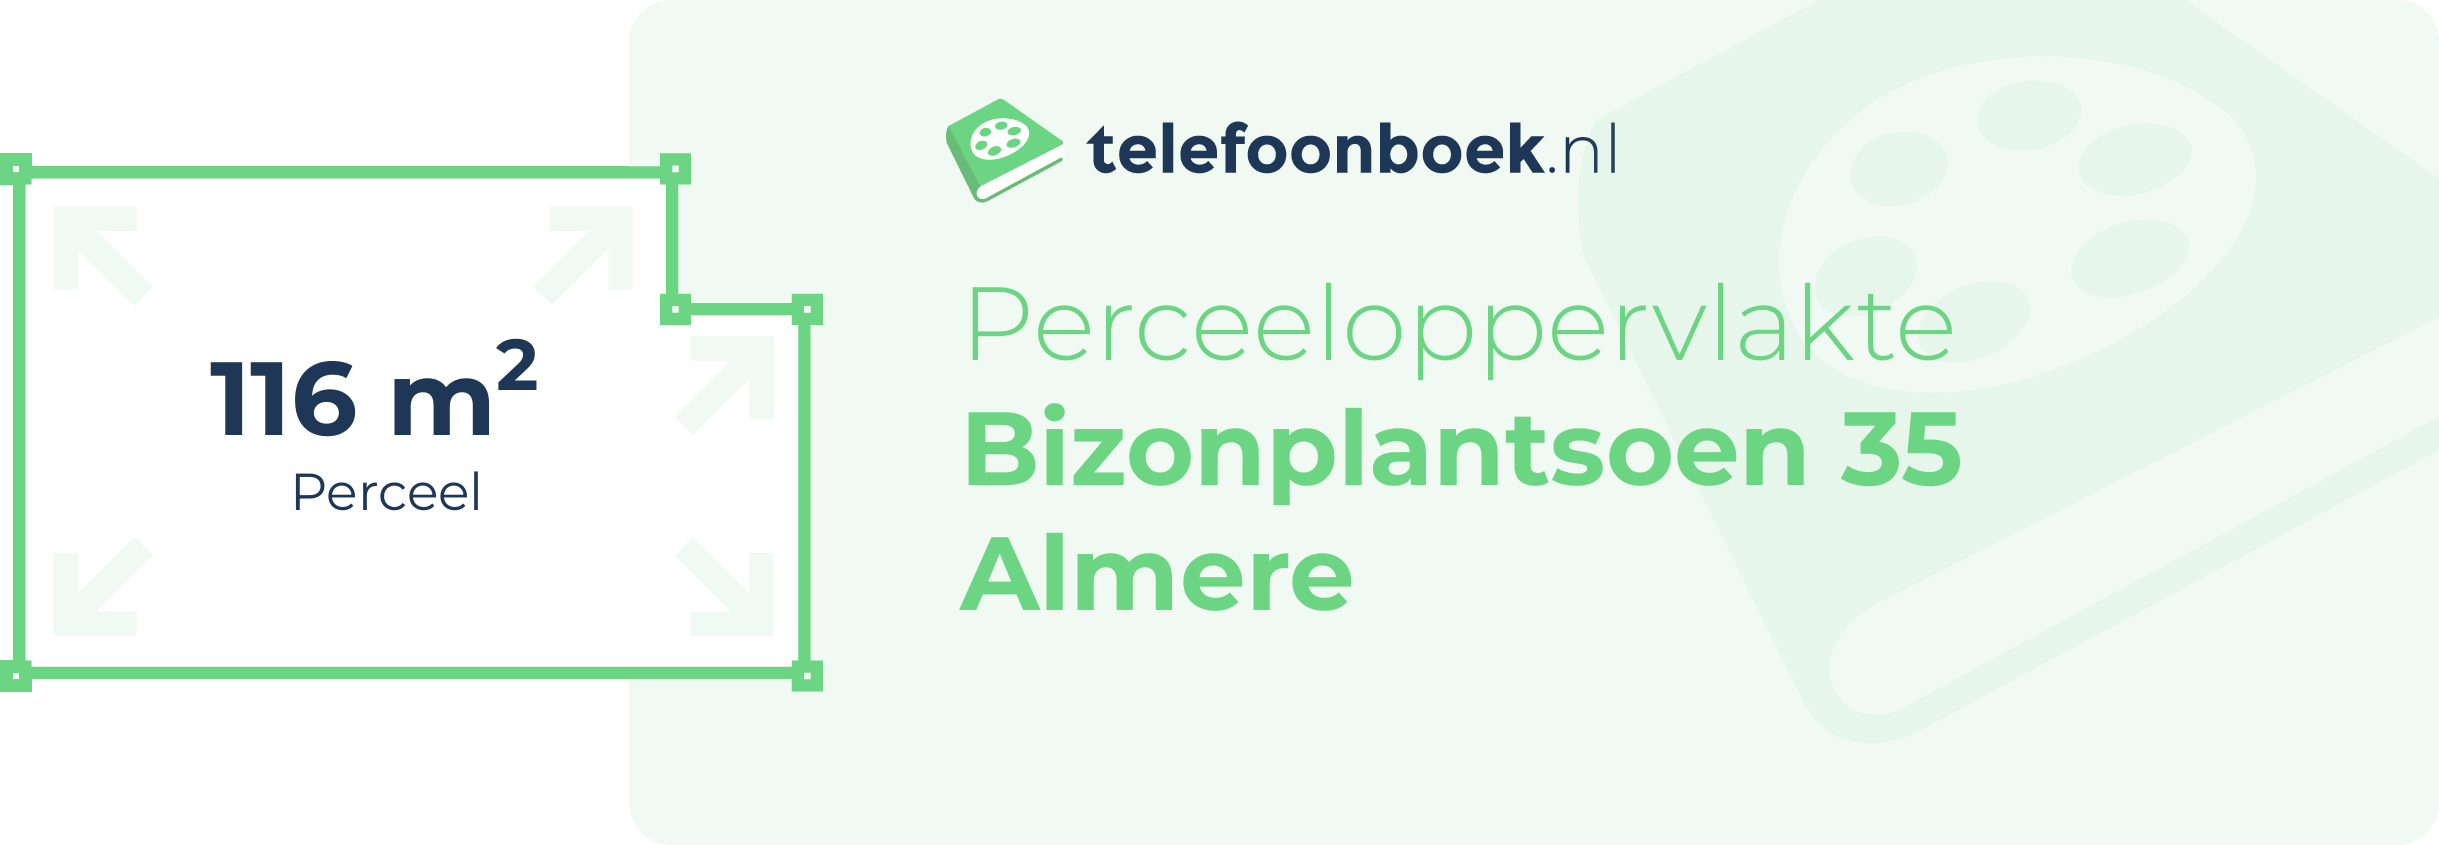 Perceeloppervlakte Bizonplantsoen 35 Almere